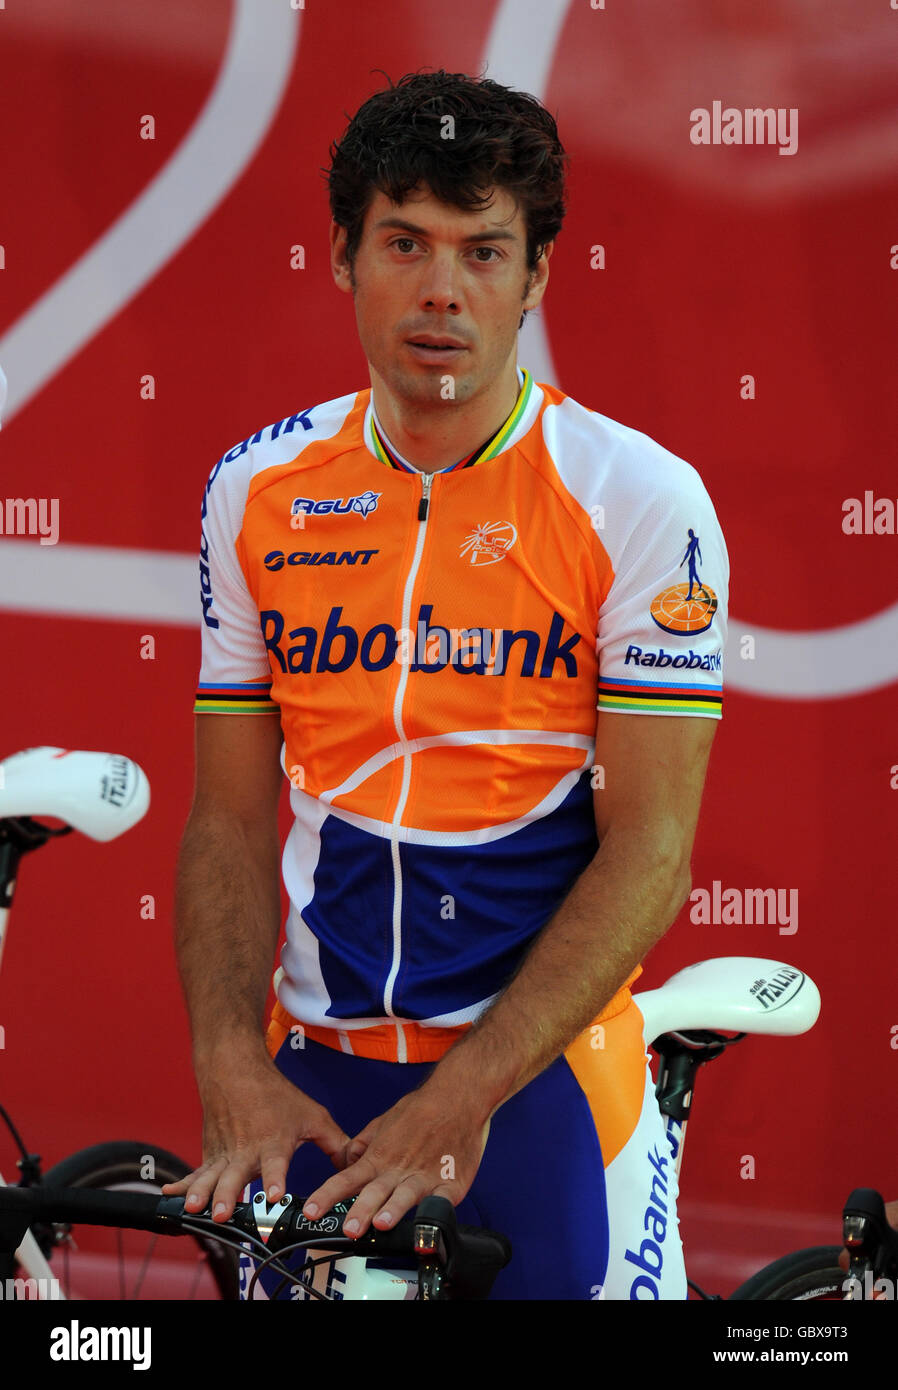 Cycling - Tour de France 2009 - Team Presentations - Monaco Stock Photo